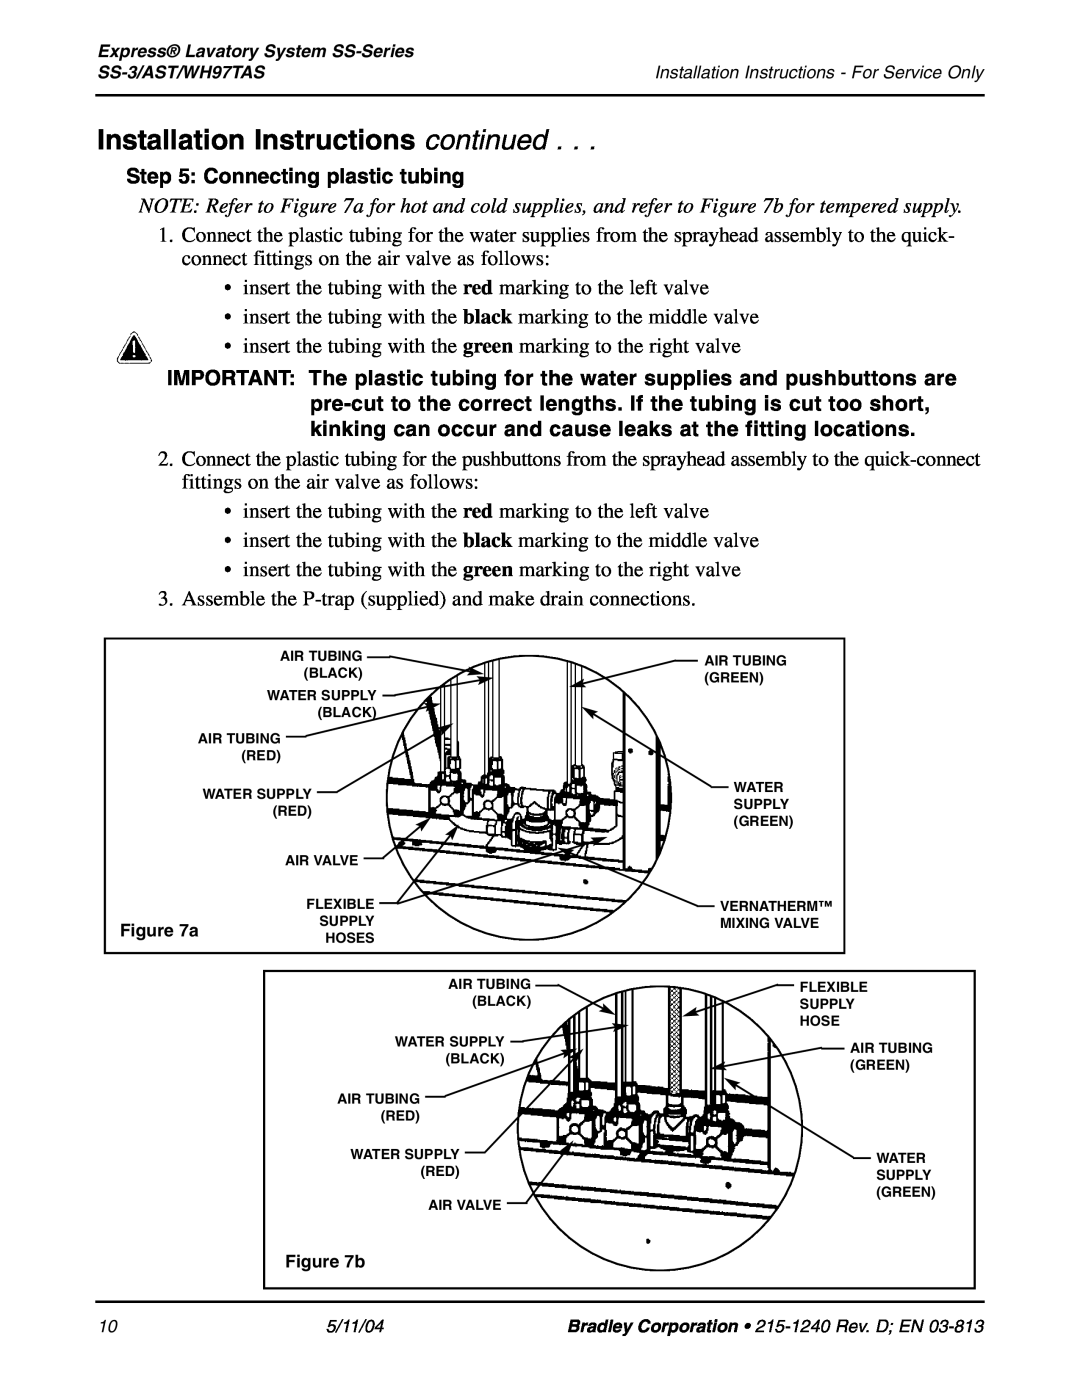 Bradley Smoker SS-3 installation instructions Connecting plastic tubing, Installation Instructions continued 